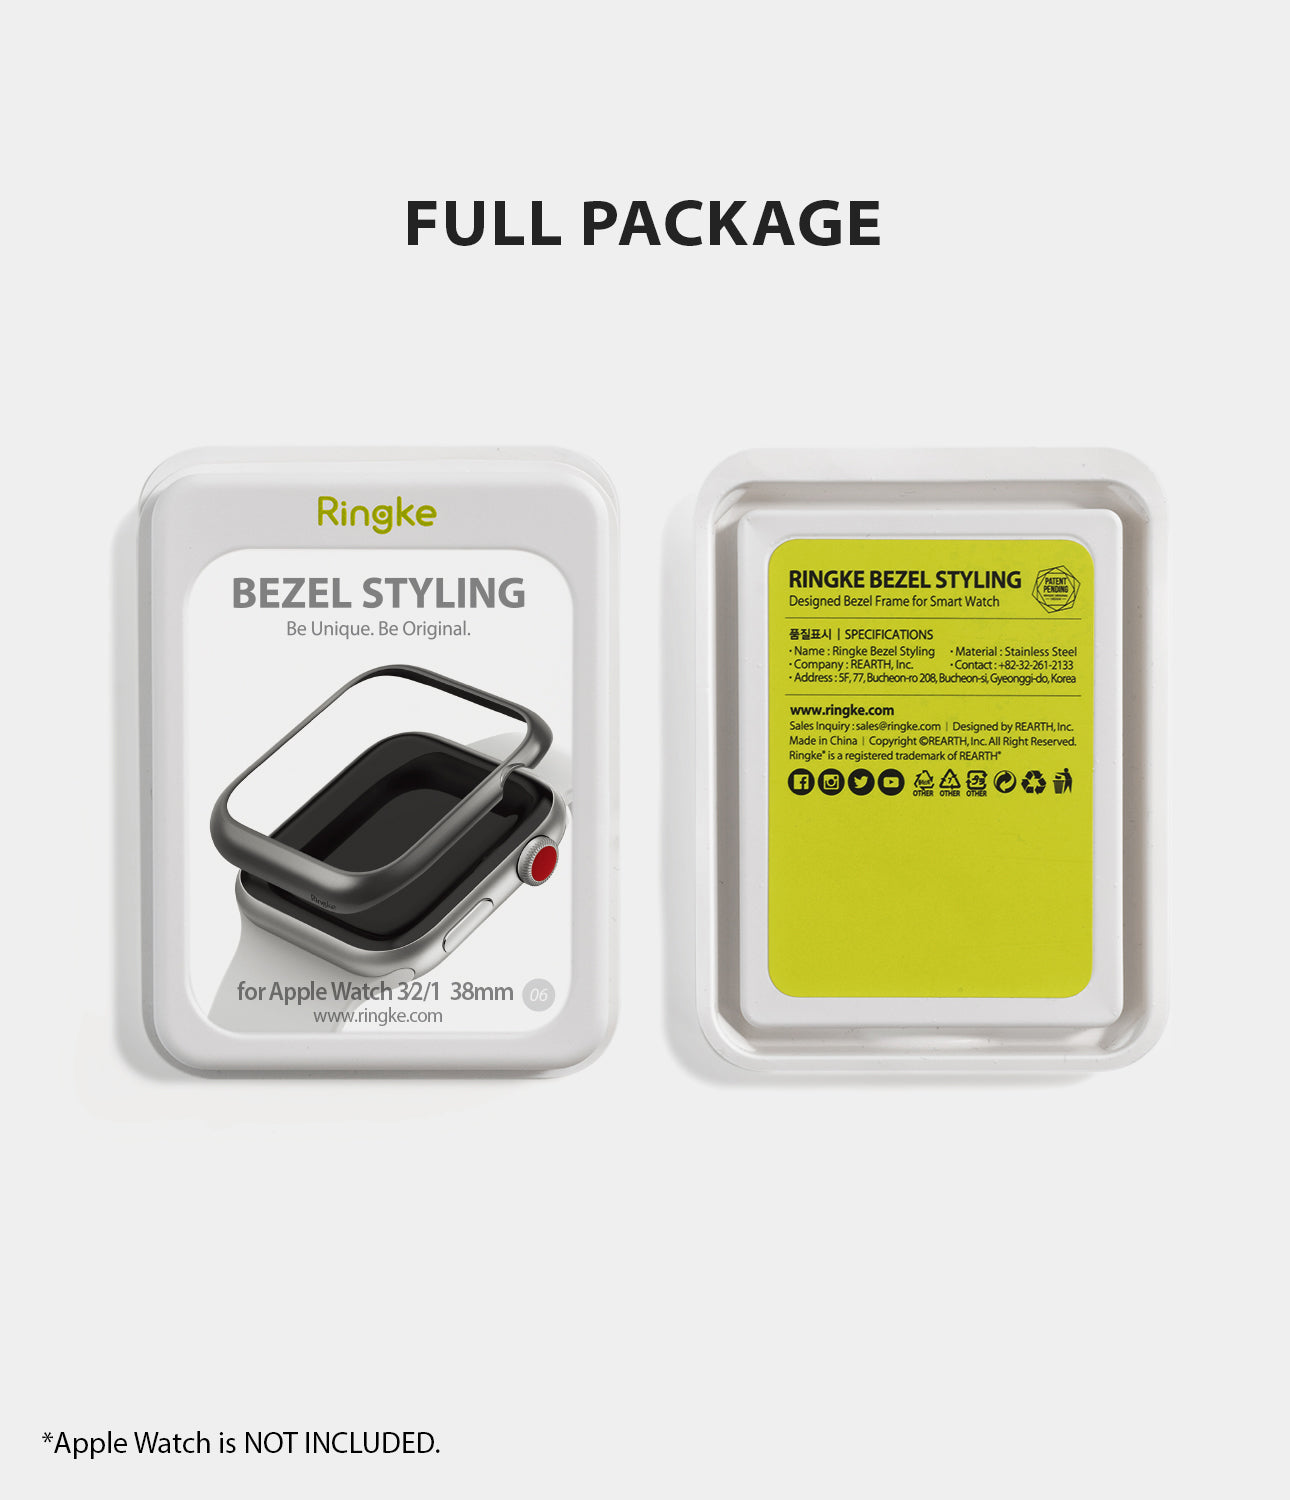 apple watch 3 2 1 38mm case ringke bezel styling stainless steel frame cover 38-06 full package